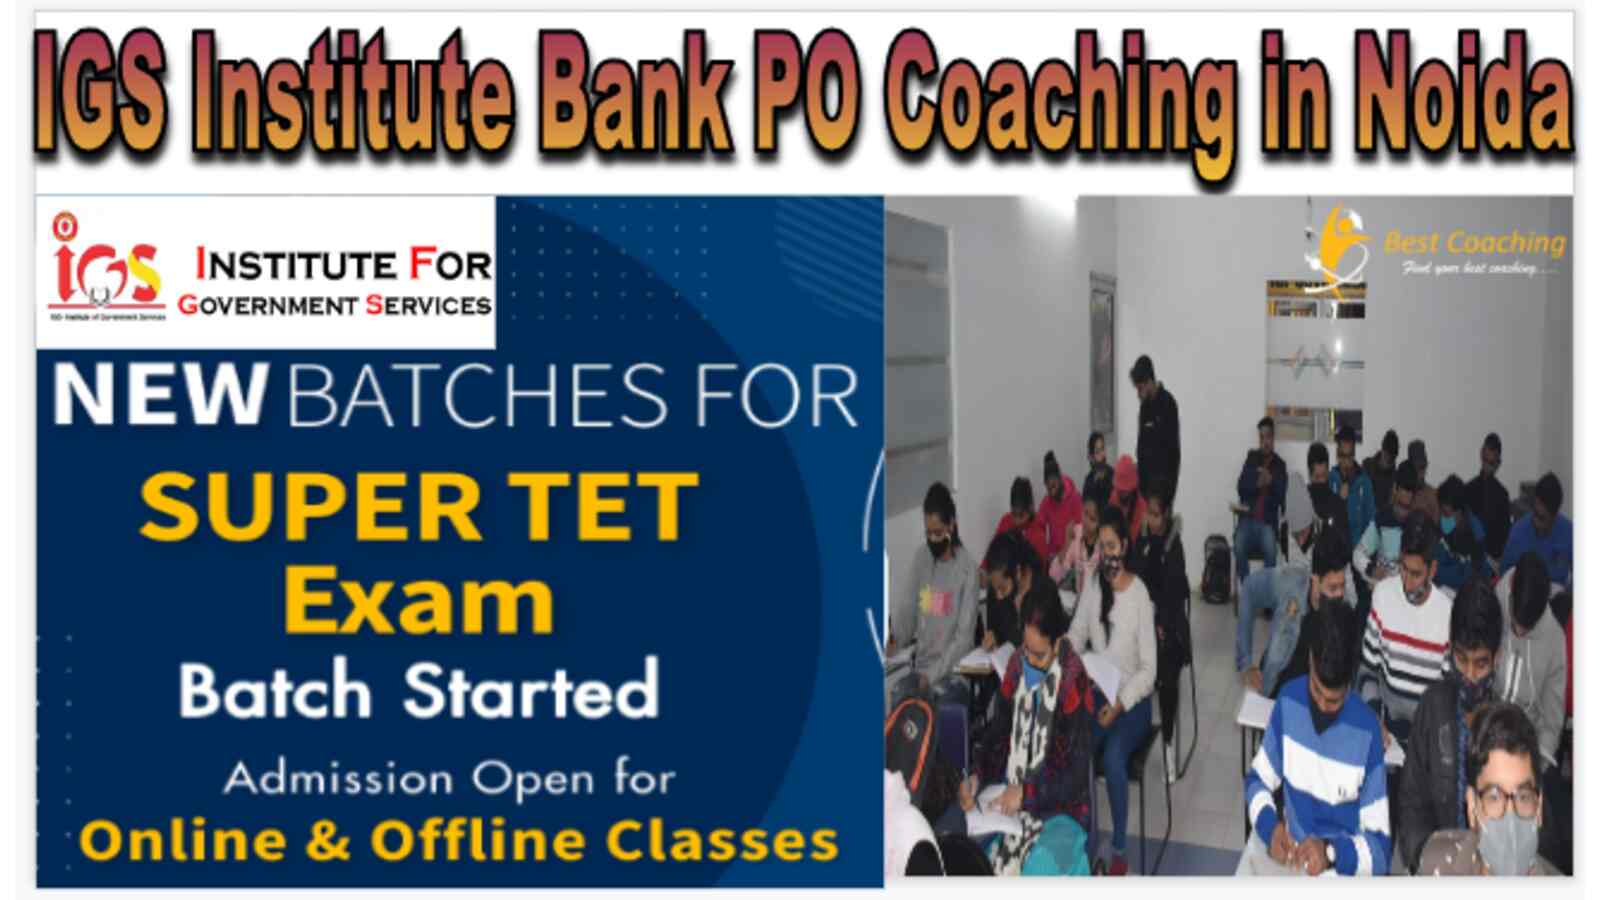 IGS Institute Bank PO Coaching in Noida